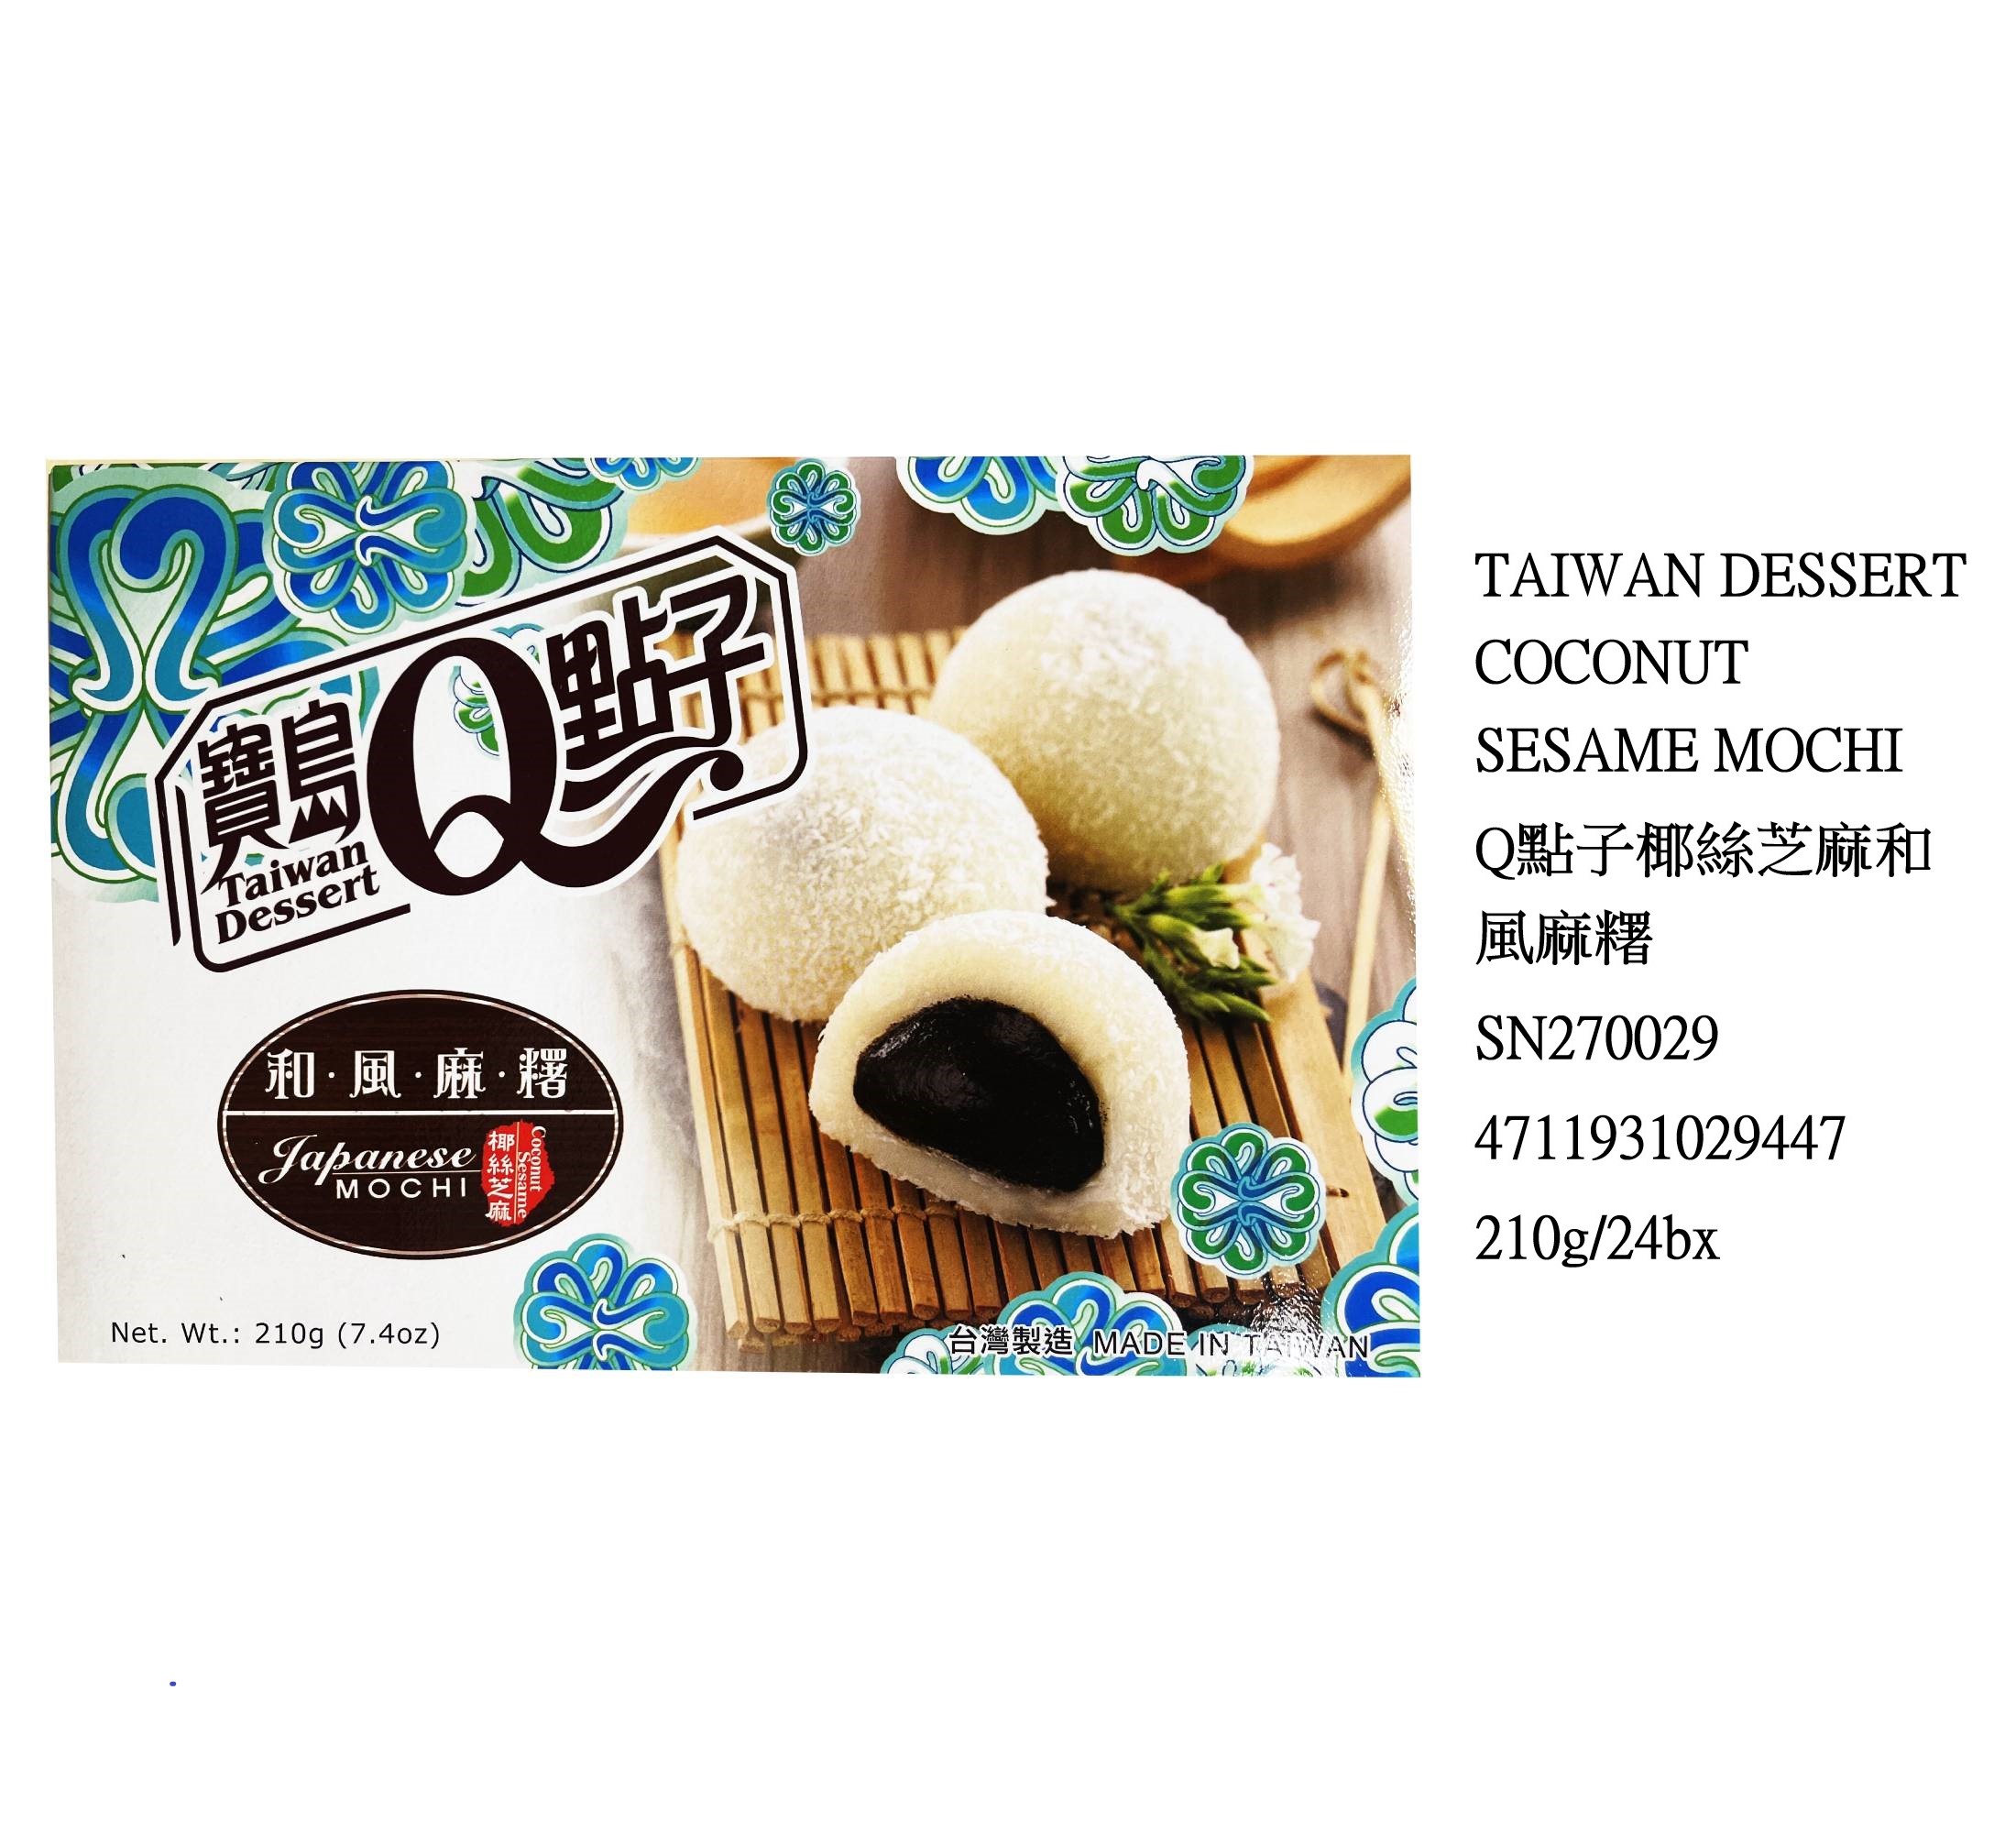 TAIWAN DESSERT COCONUT SESAME MOCHI SN270029